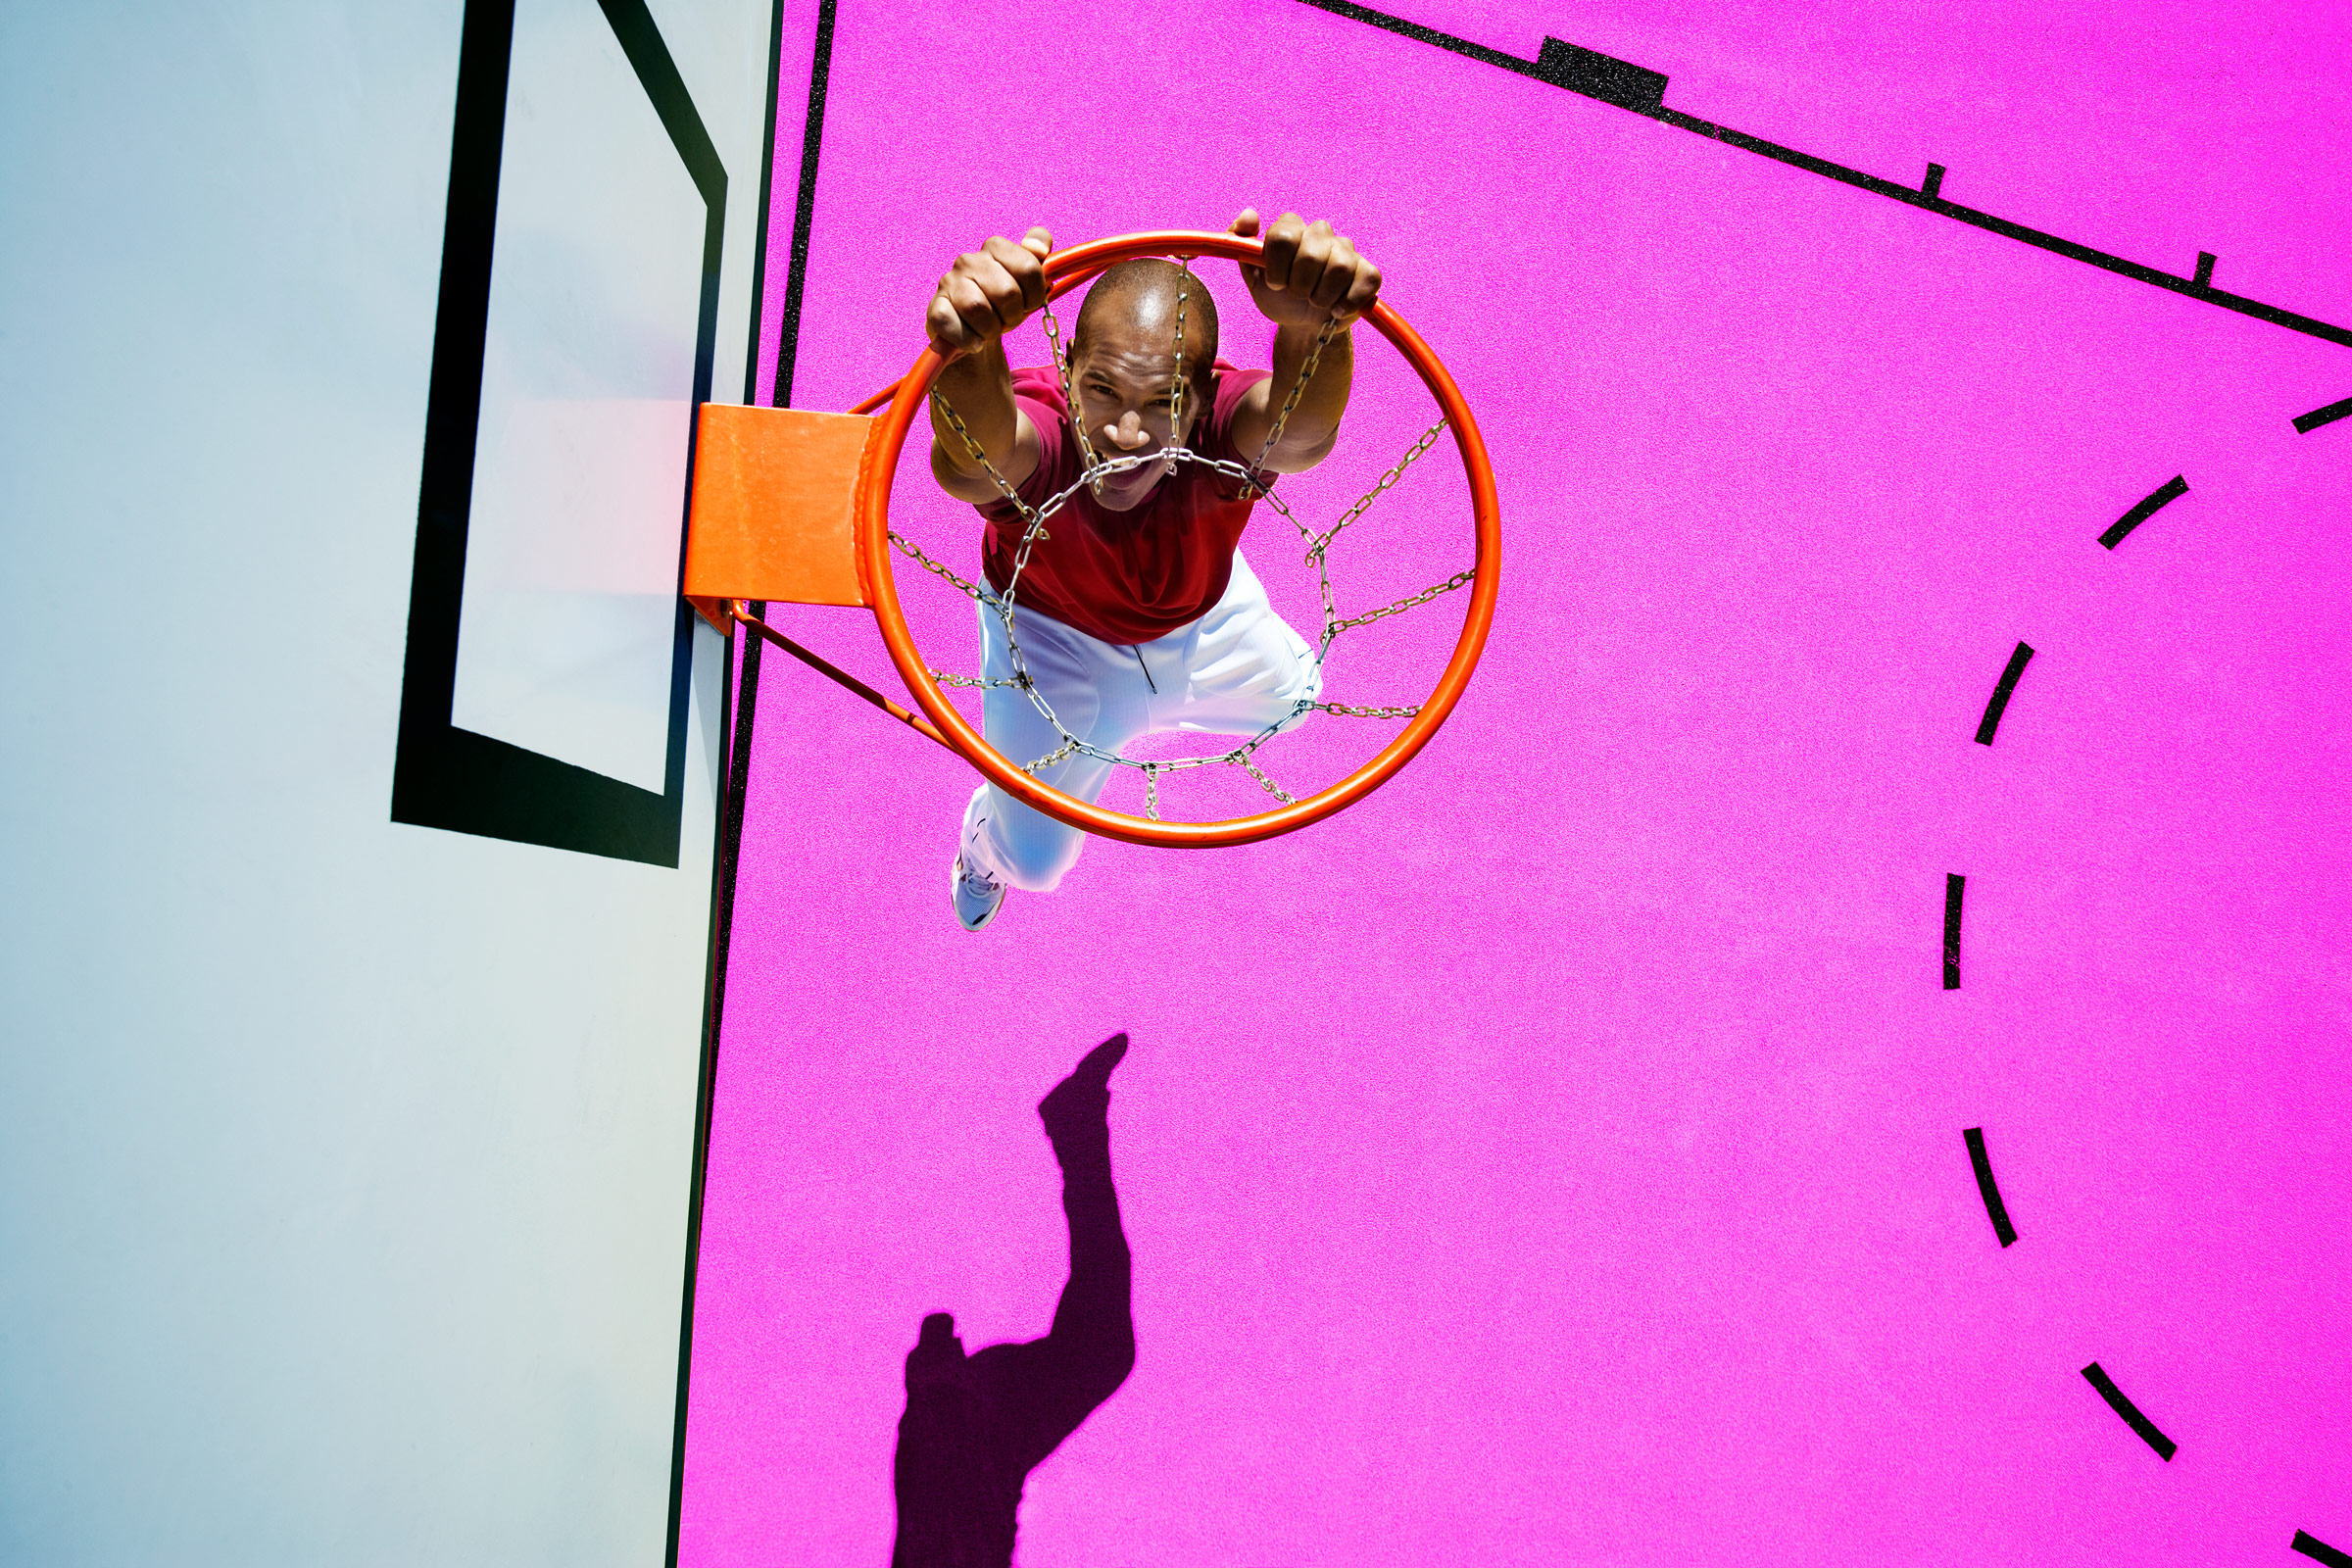 young man playing basketball on pink playground